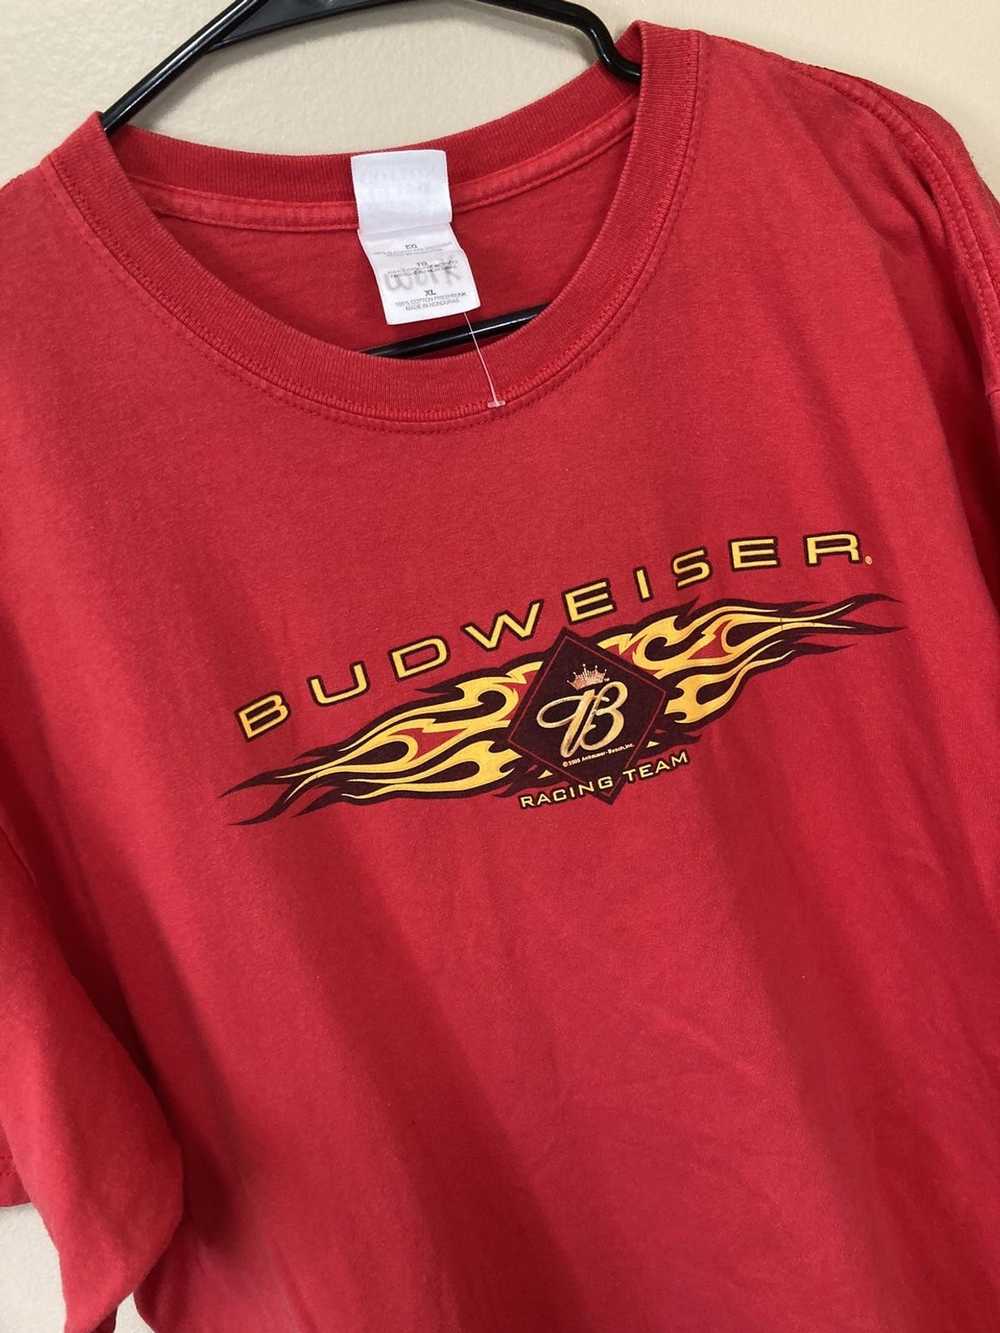 Vintage 2005 Budweiser Racing T-Shirt - image 3